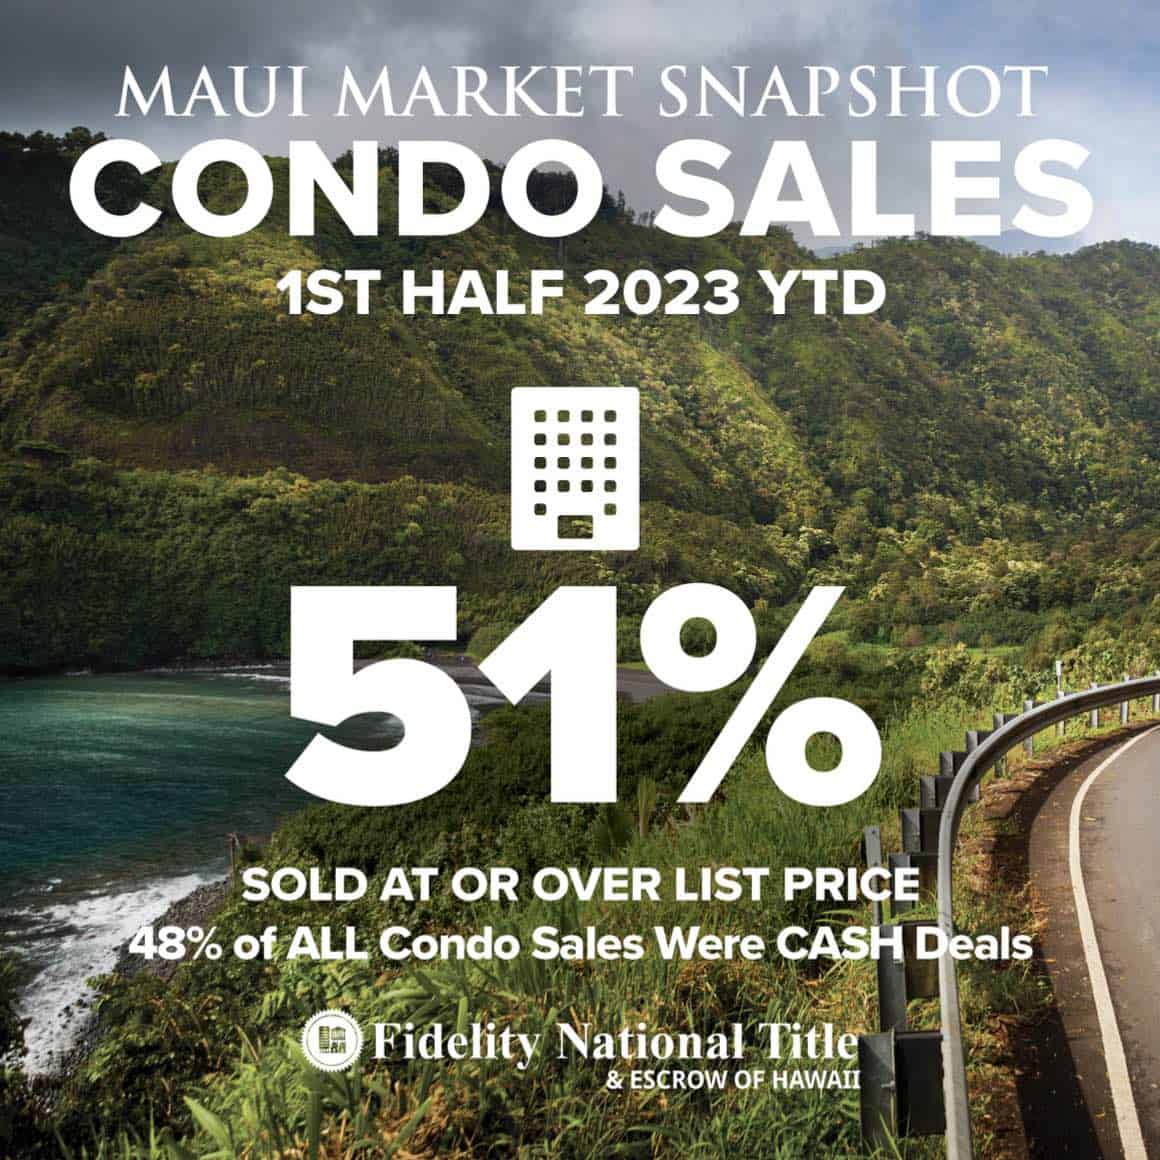 Maui condo sales 1st half 2023